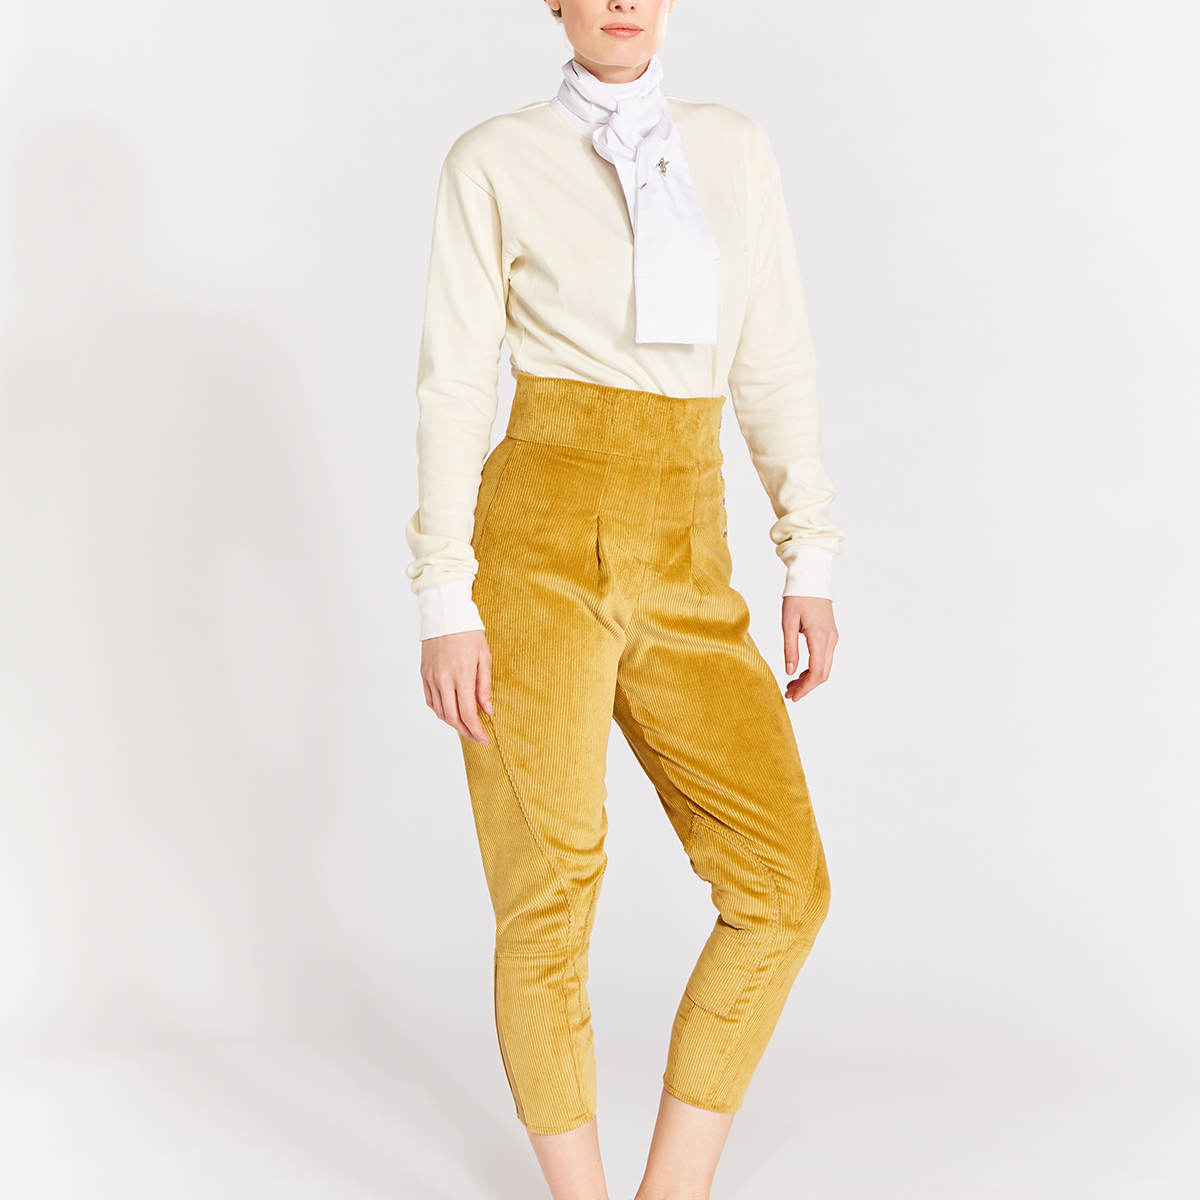 Stylish and Comfortable Amazon Pants to Elevate Your Work Wardrobe